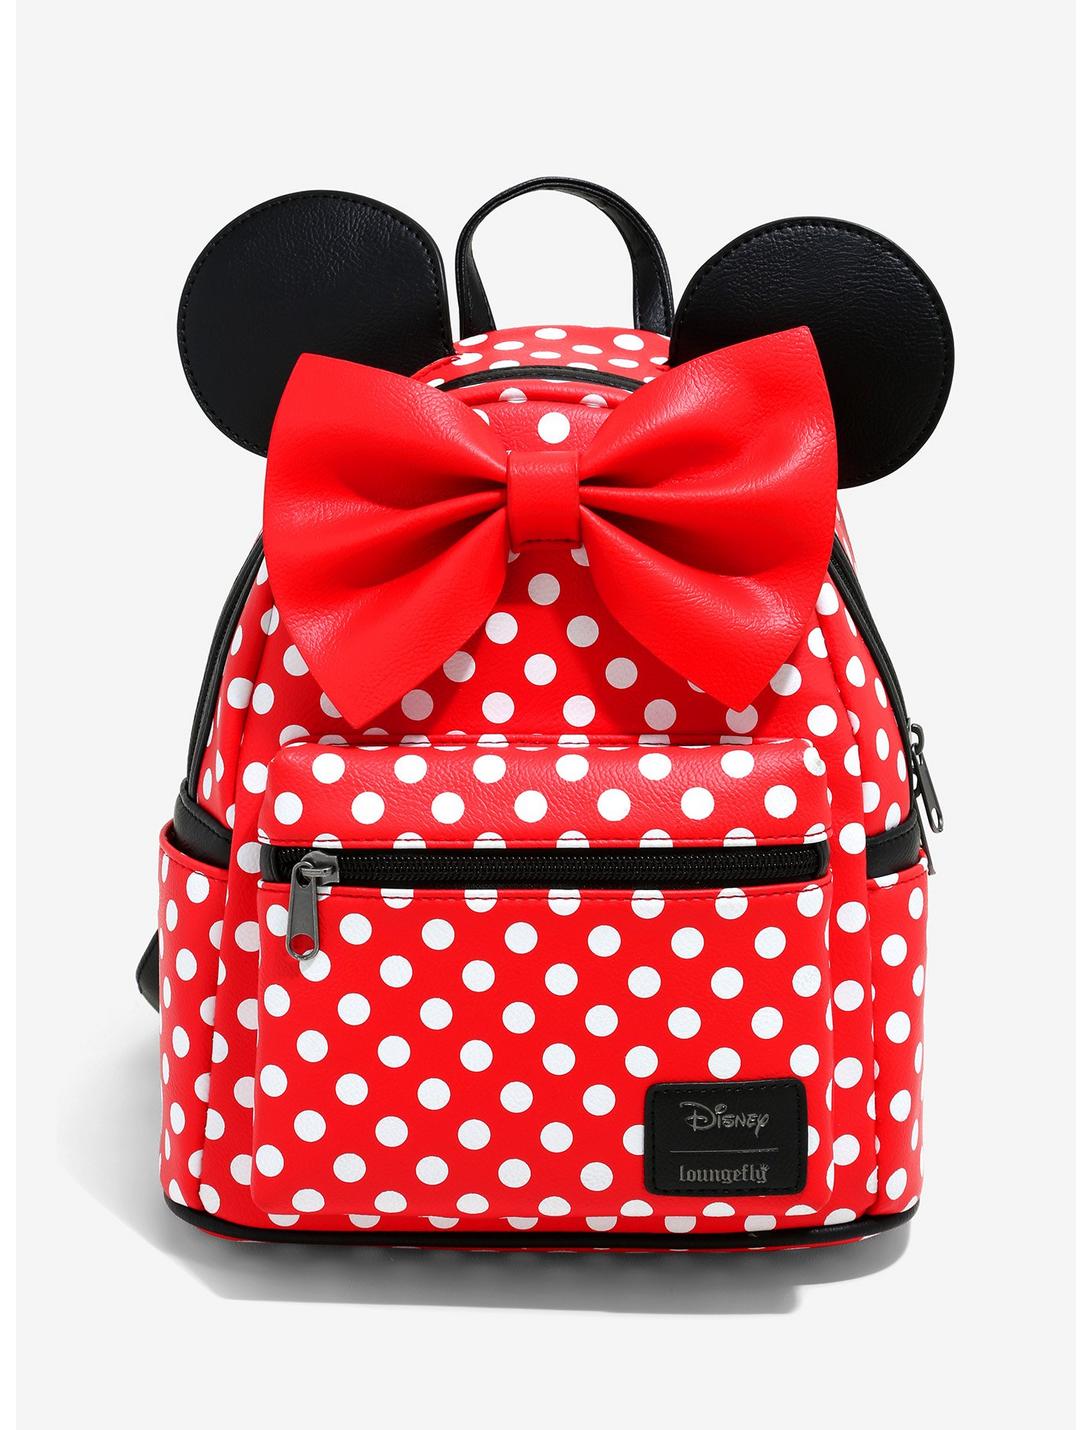 Loungefly Disney Minnie Mouse Polka Dot Mini Backpack | Hot Topic